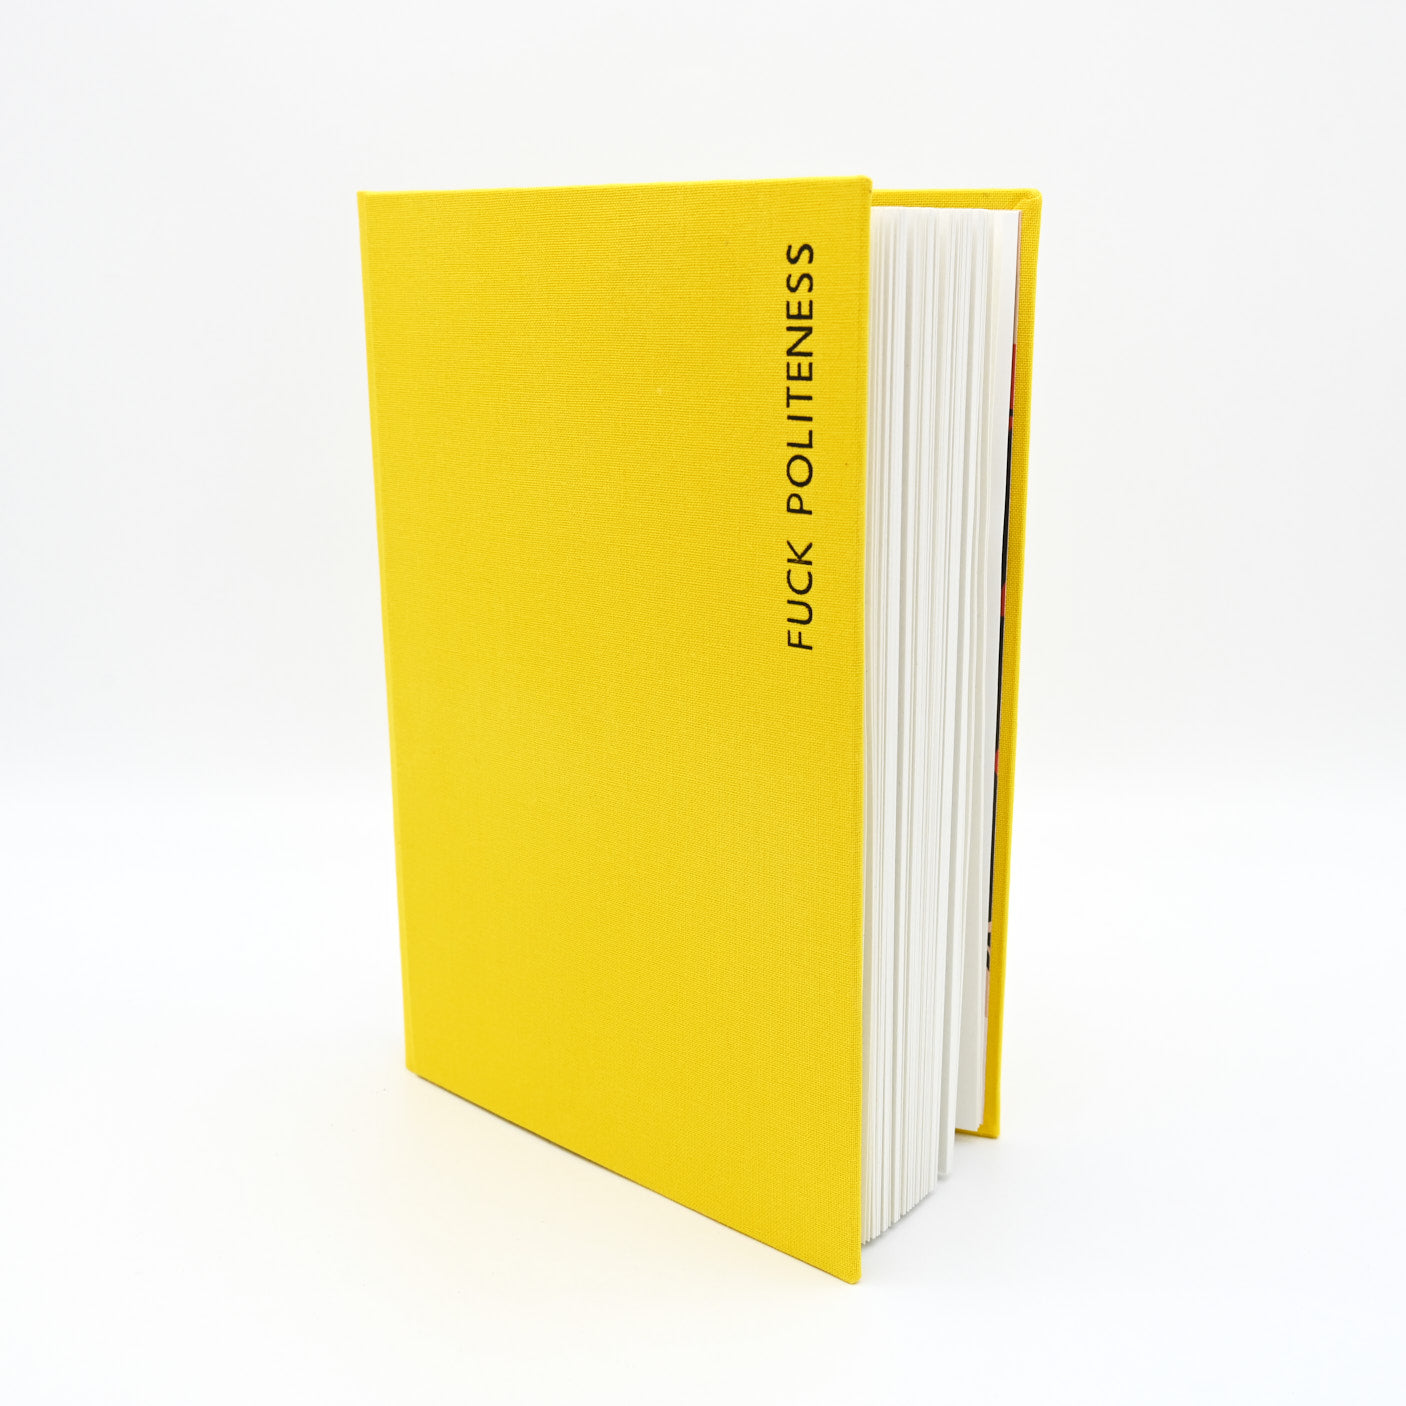 F*ck politeness – Notizbuch A5 - sunny yellow